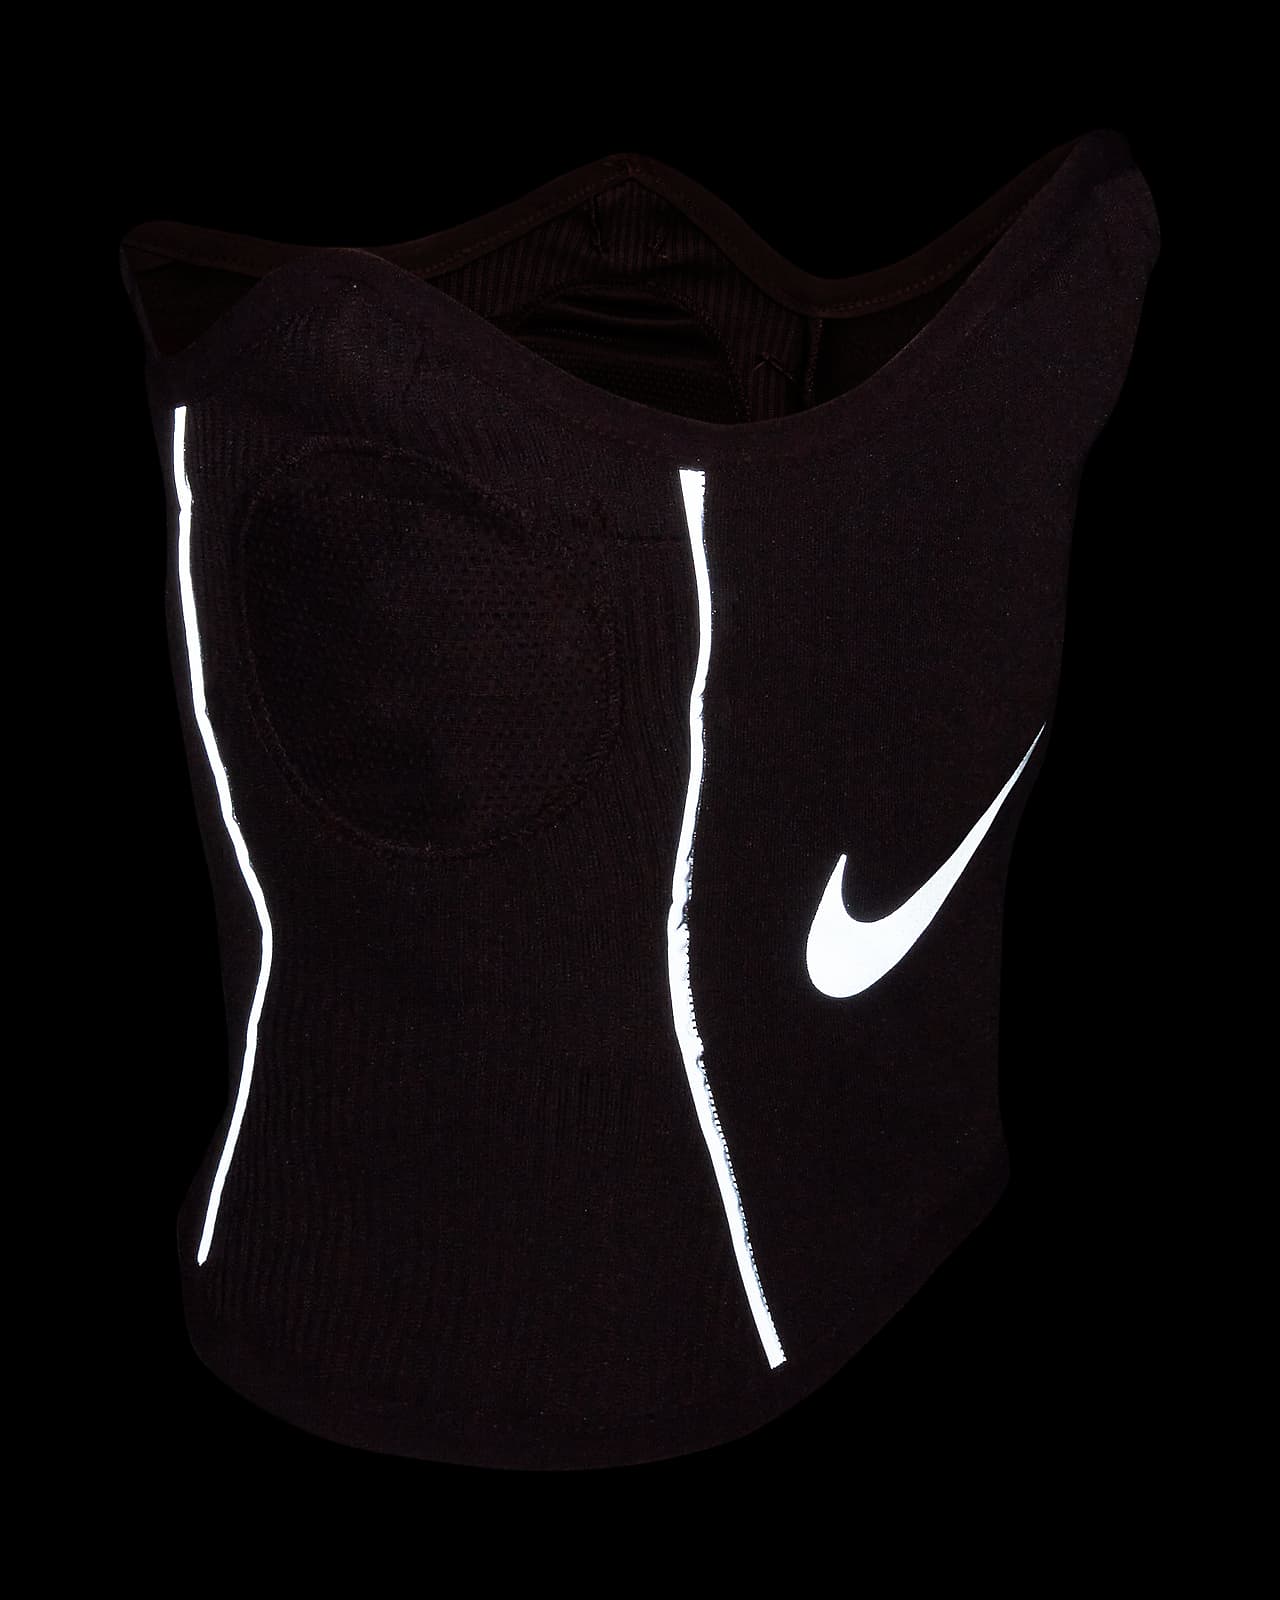 Cuello térmico Nike Winter Nike.com